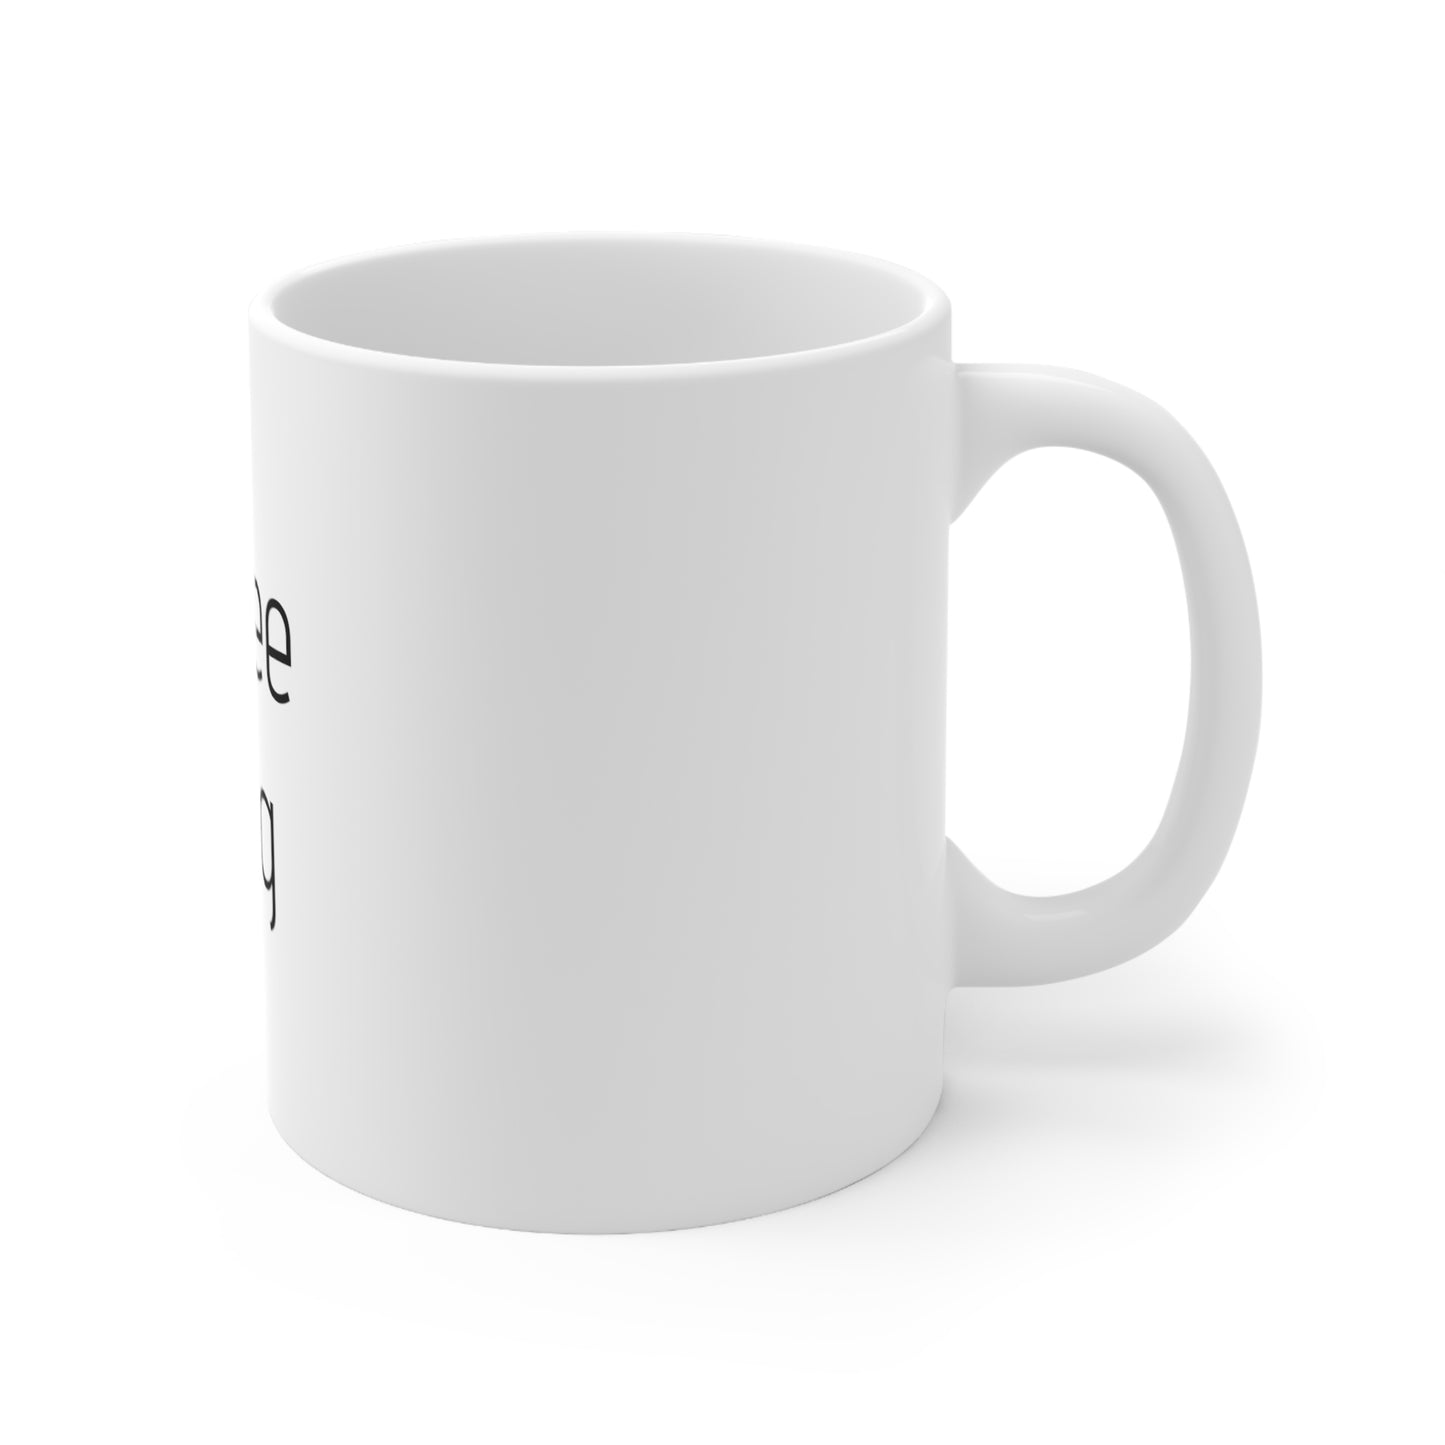 "Coffee Mug" Mug - 11oz